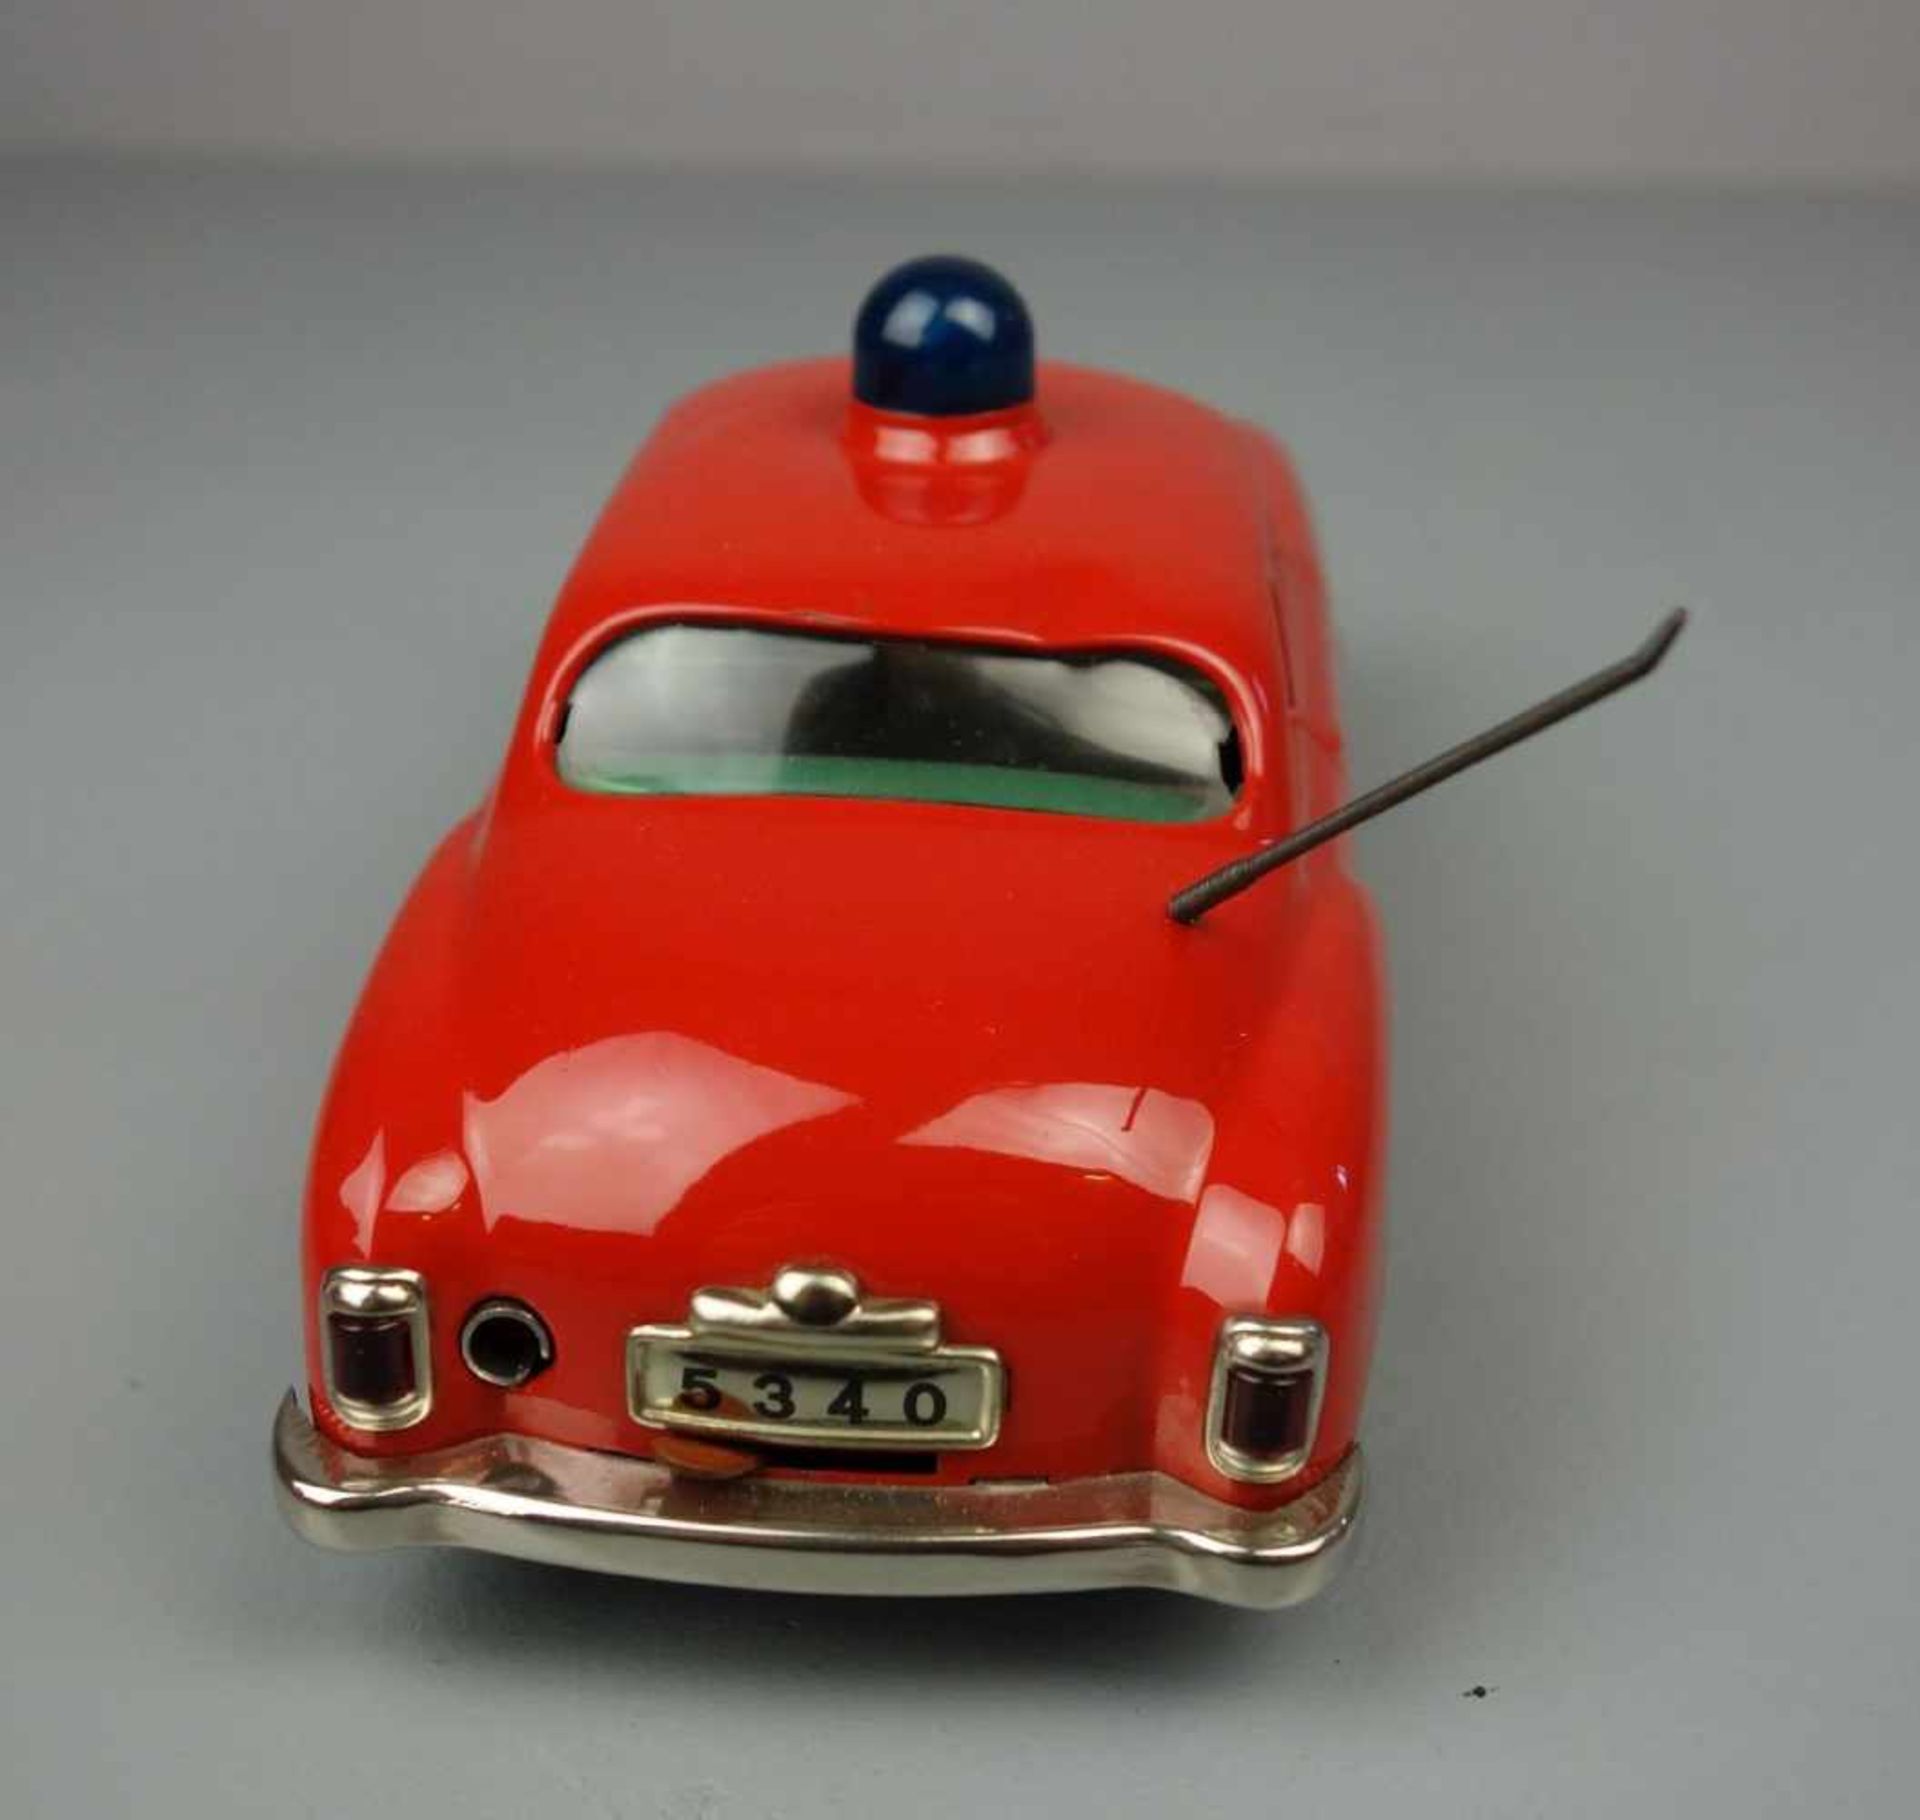 BLECHSPIELZEUG / FAHRZEUG: Polizeiauto / Alarm-Car 5340 / tin toy police car, Manufaktur Schuco - - Bild 5 aus 7